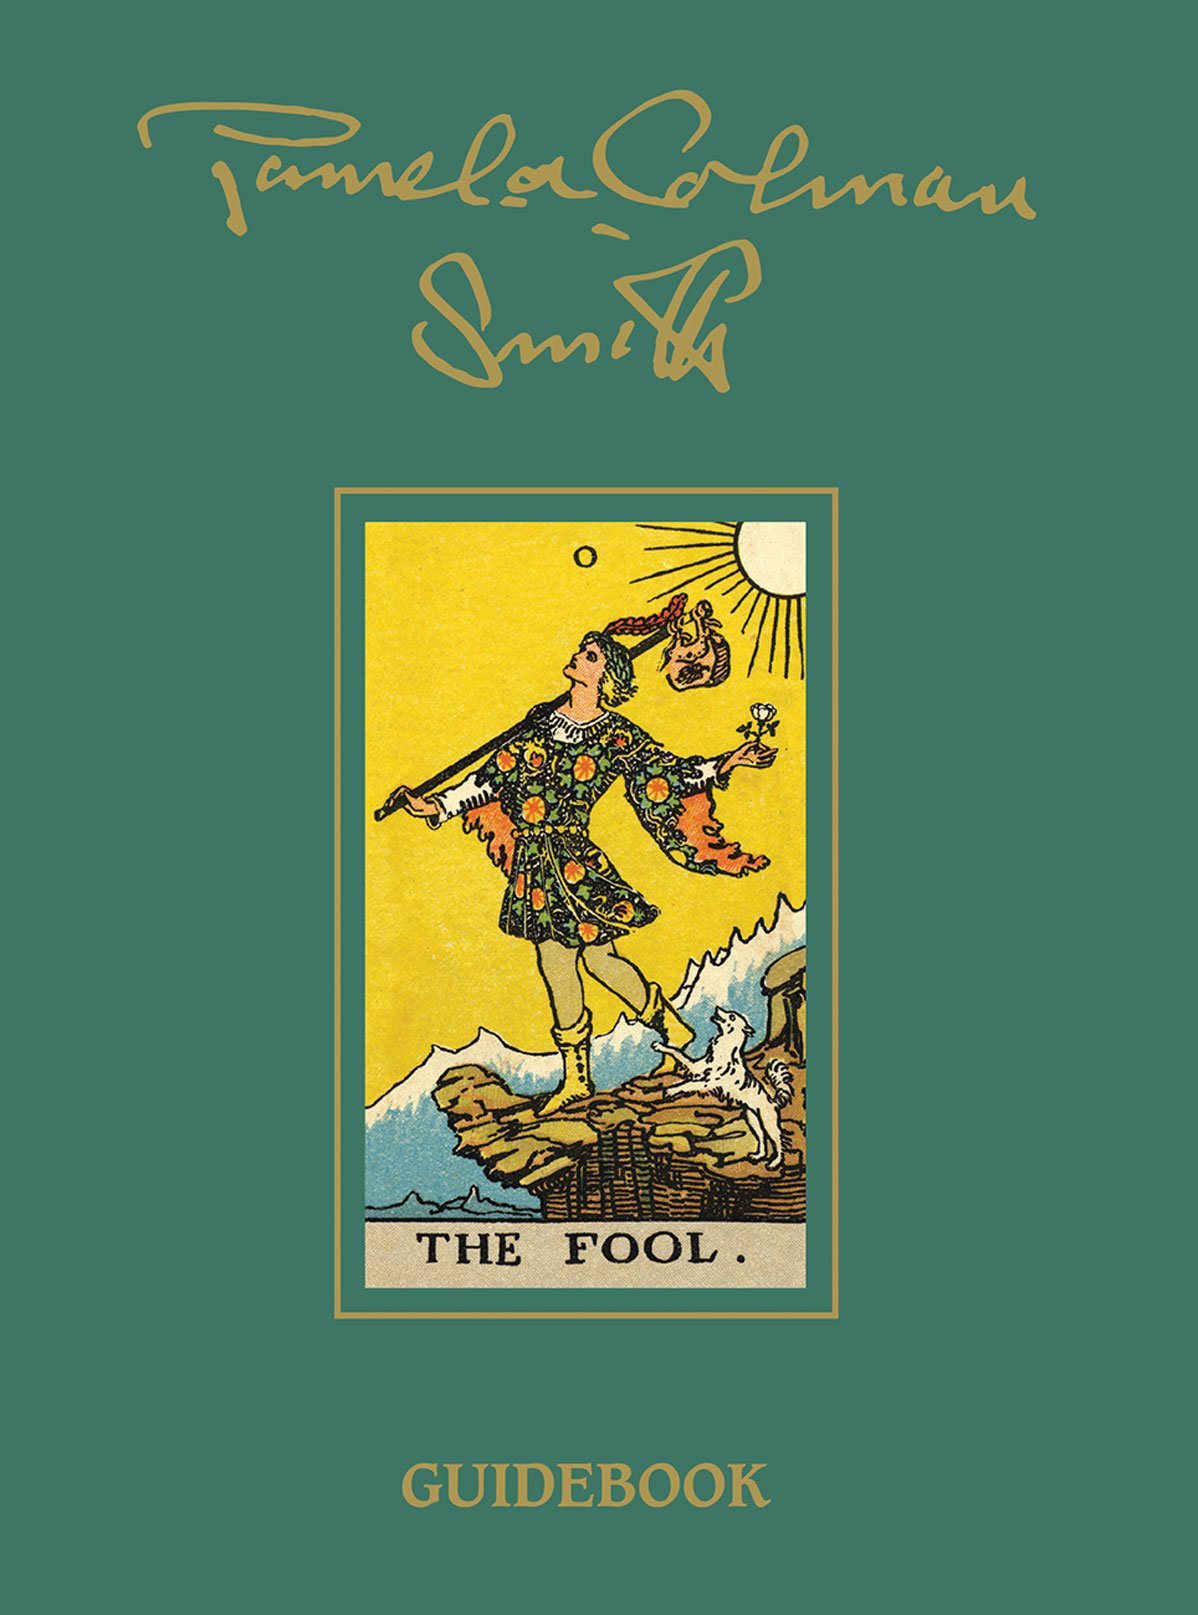 Smith-Waite Deluxe Tarot: Gilded Deck & Book Set Tarot Kit